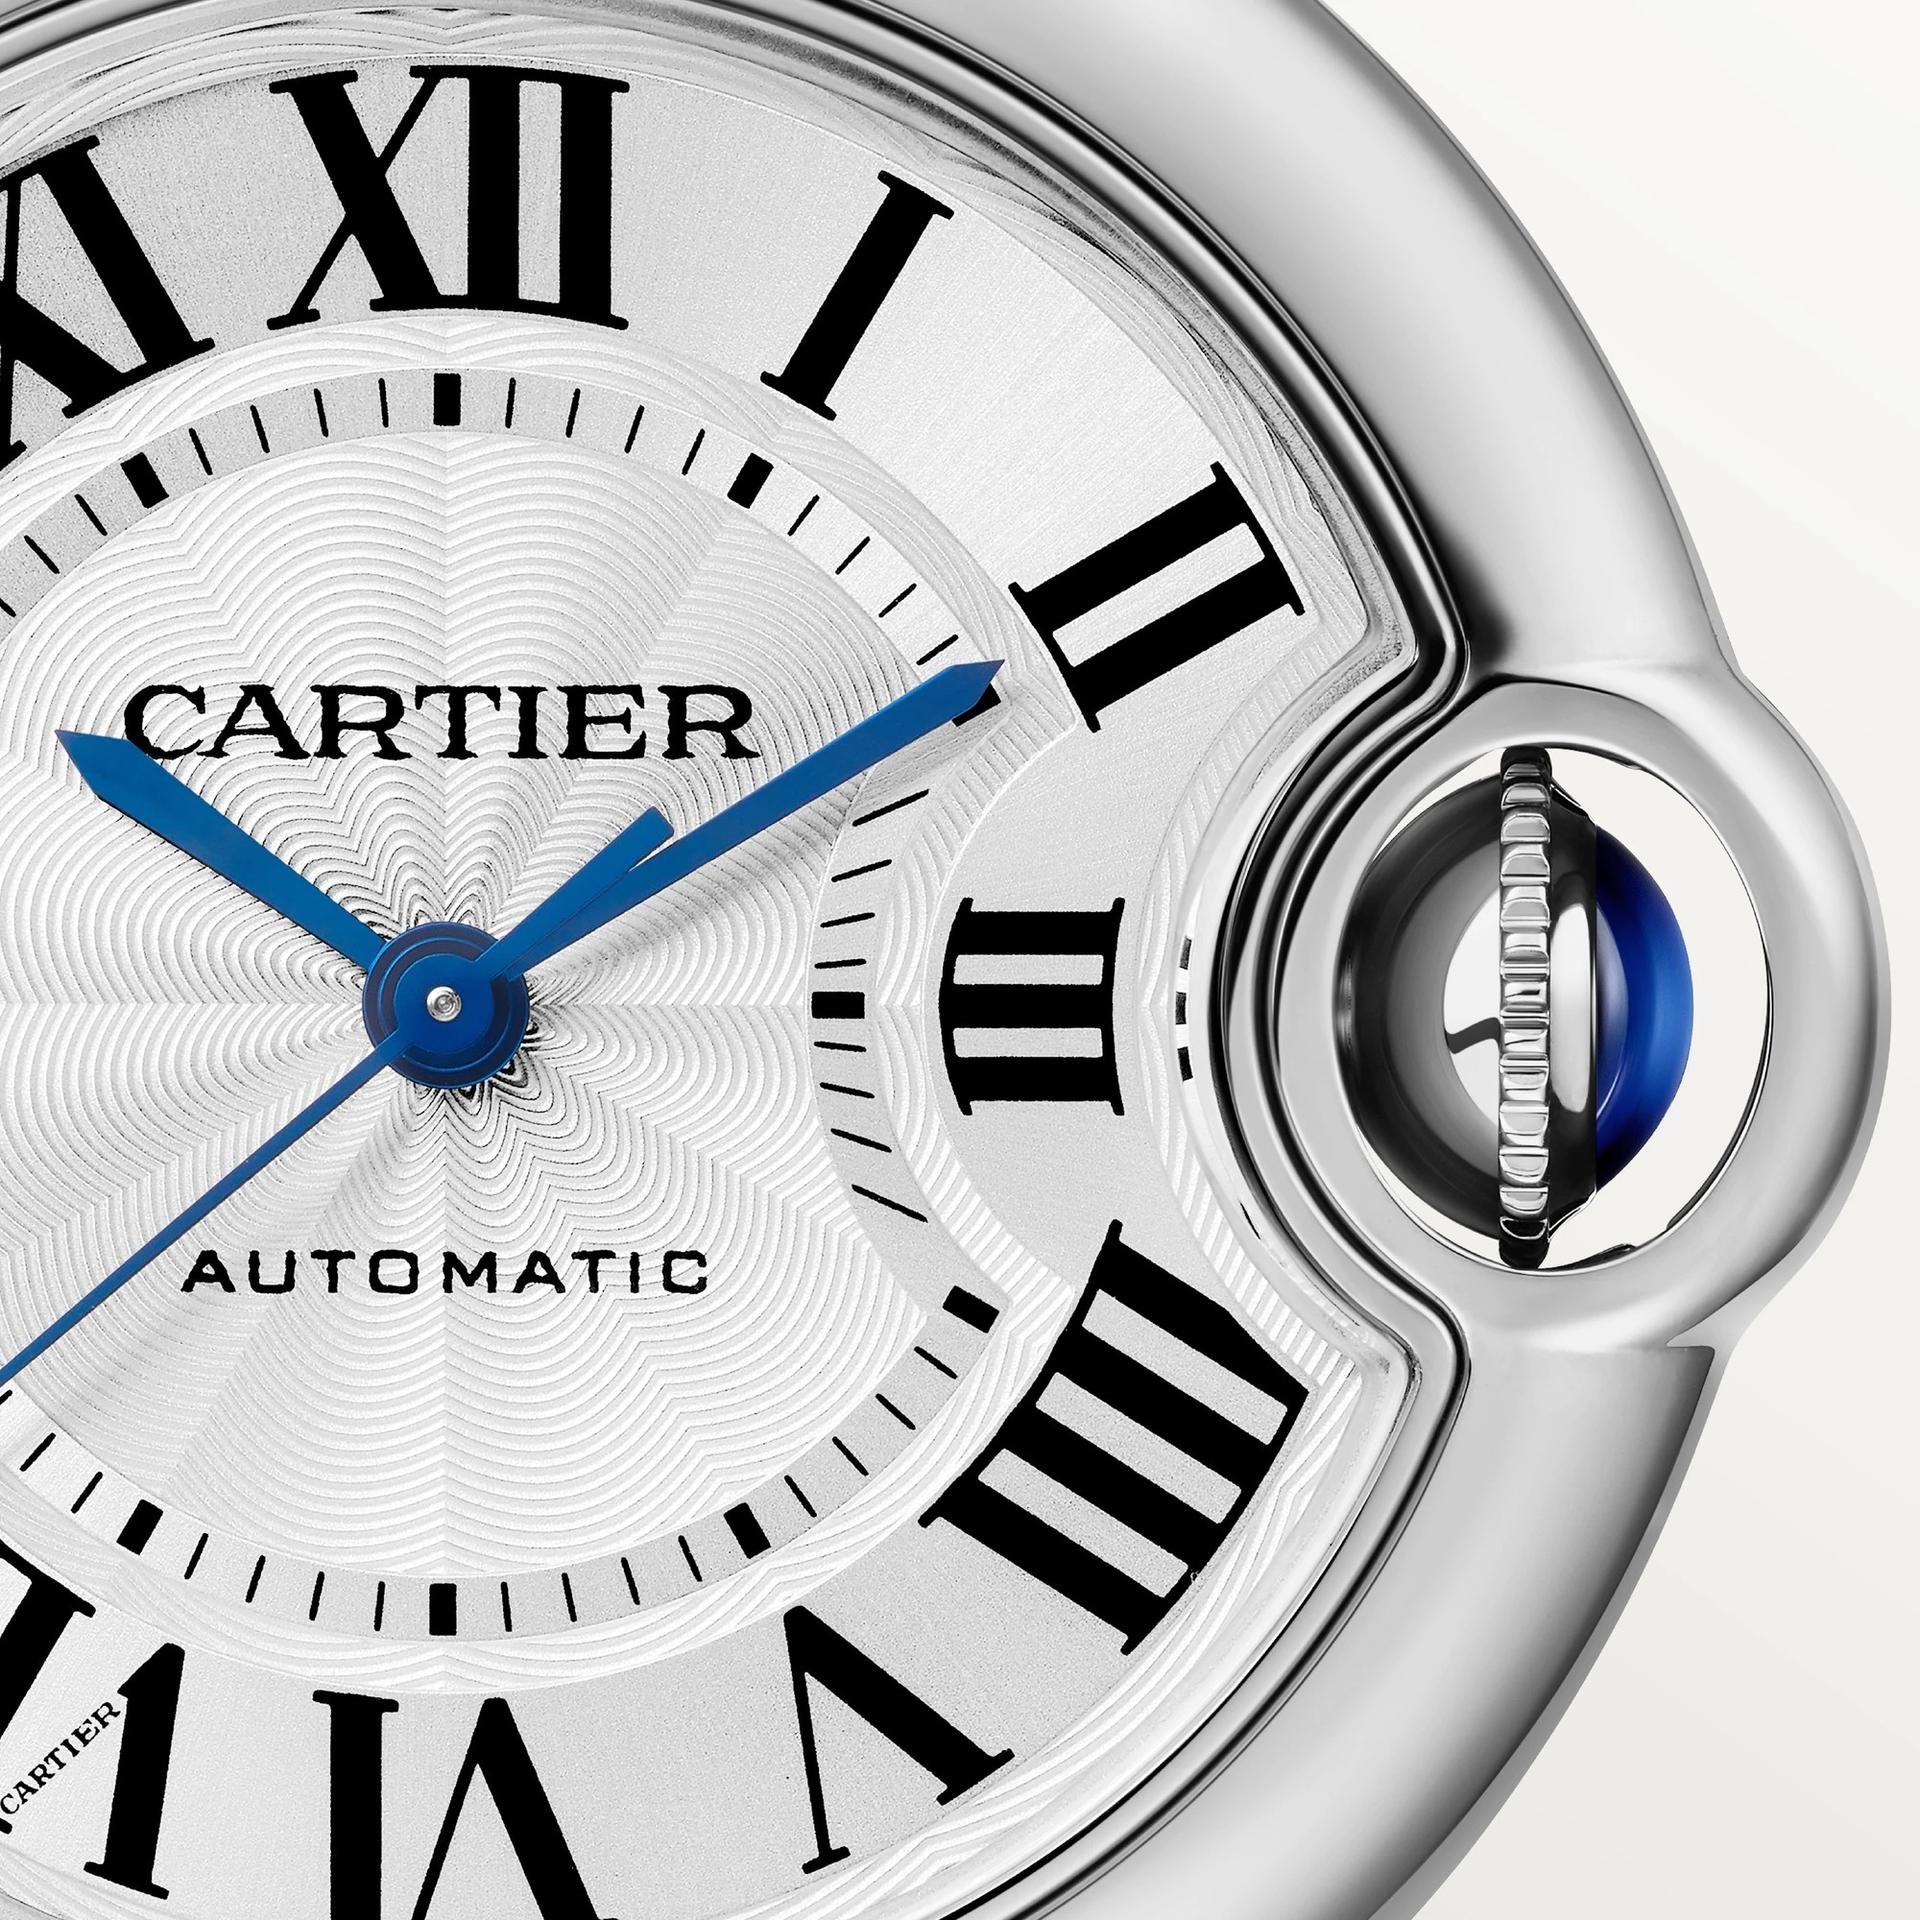 Ballon Bleu de Cartier Watch, Silver Guilloche Dial, 33mm
